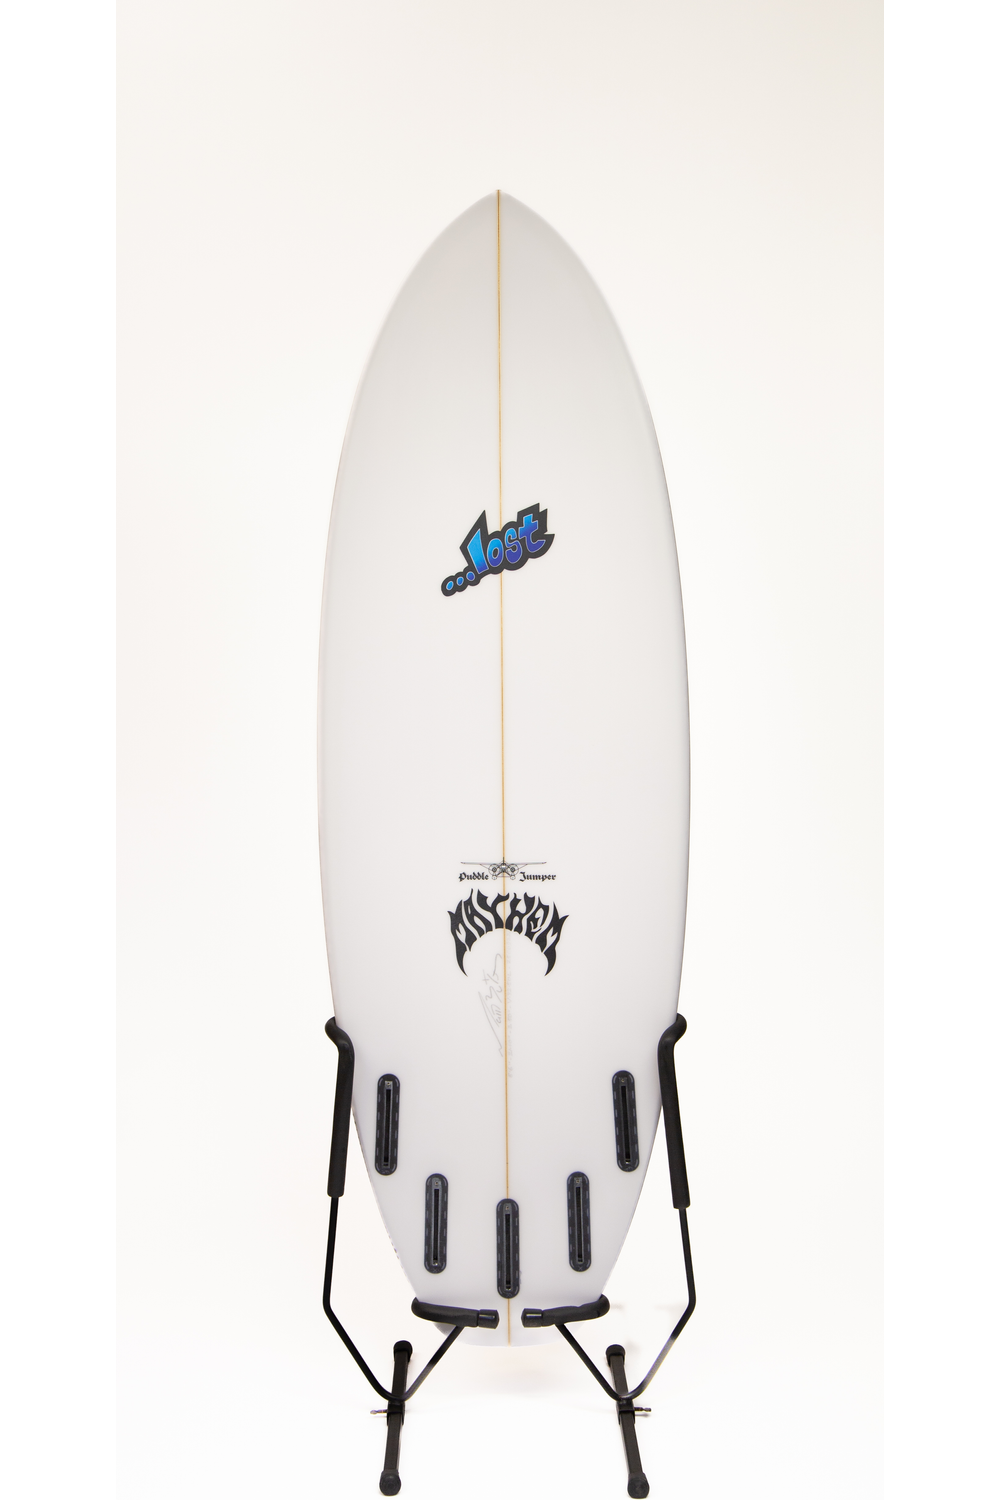 Lost Puddle Jumper, 5'6 Surfboard 32.50L PU Futures 5 Fins